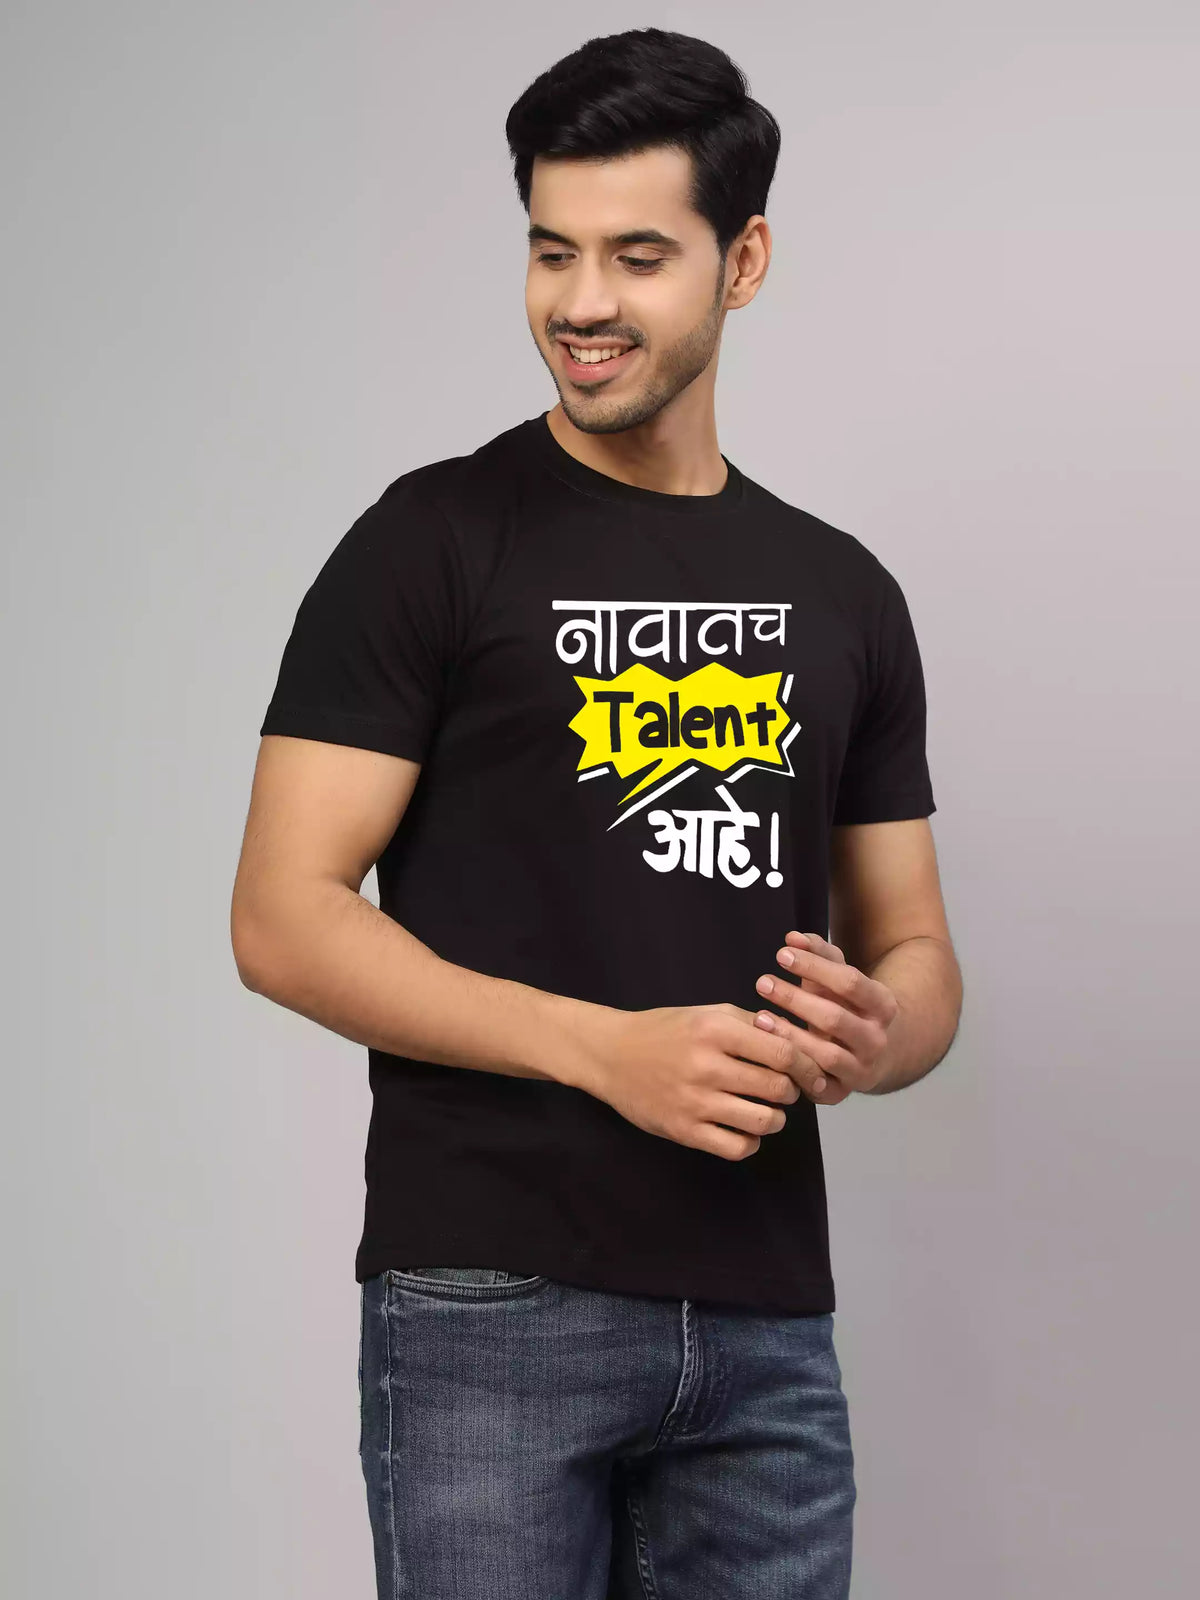 Navatach Talent - Sukhiaatma Unisex Marathi Graphic Printed Black T-sh